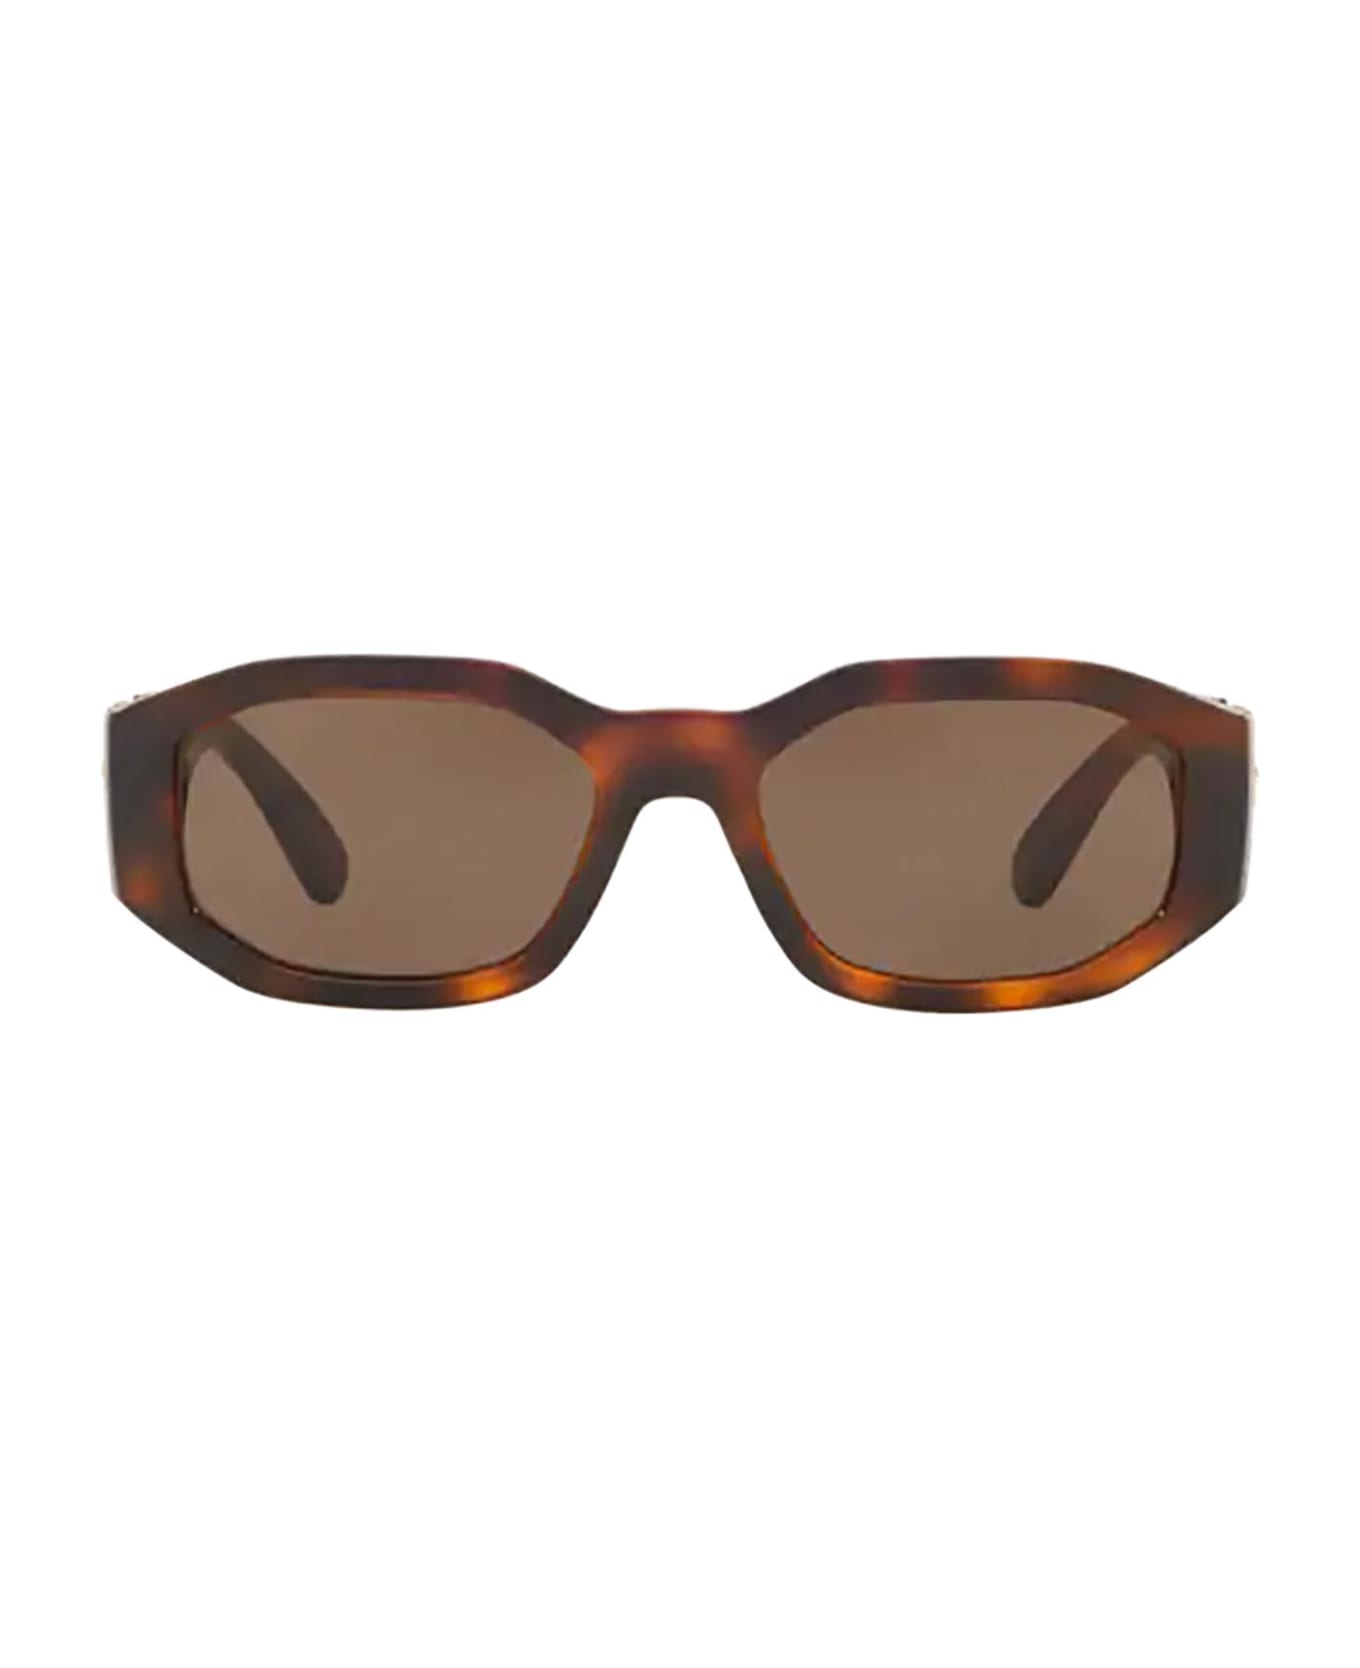 Versace Eyewear Ve4361 Havana Sunglasses - Havana サングラス